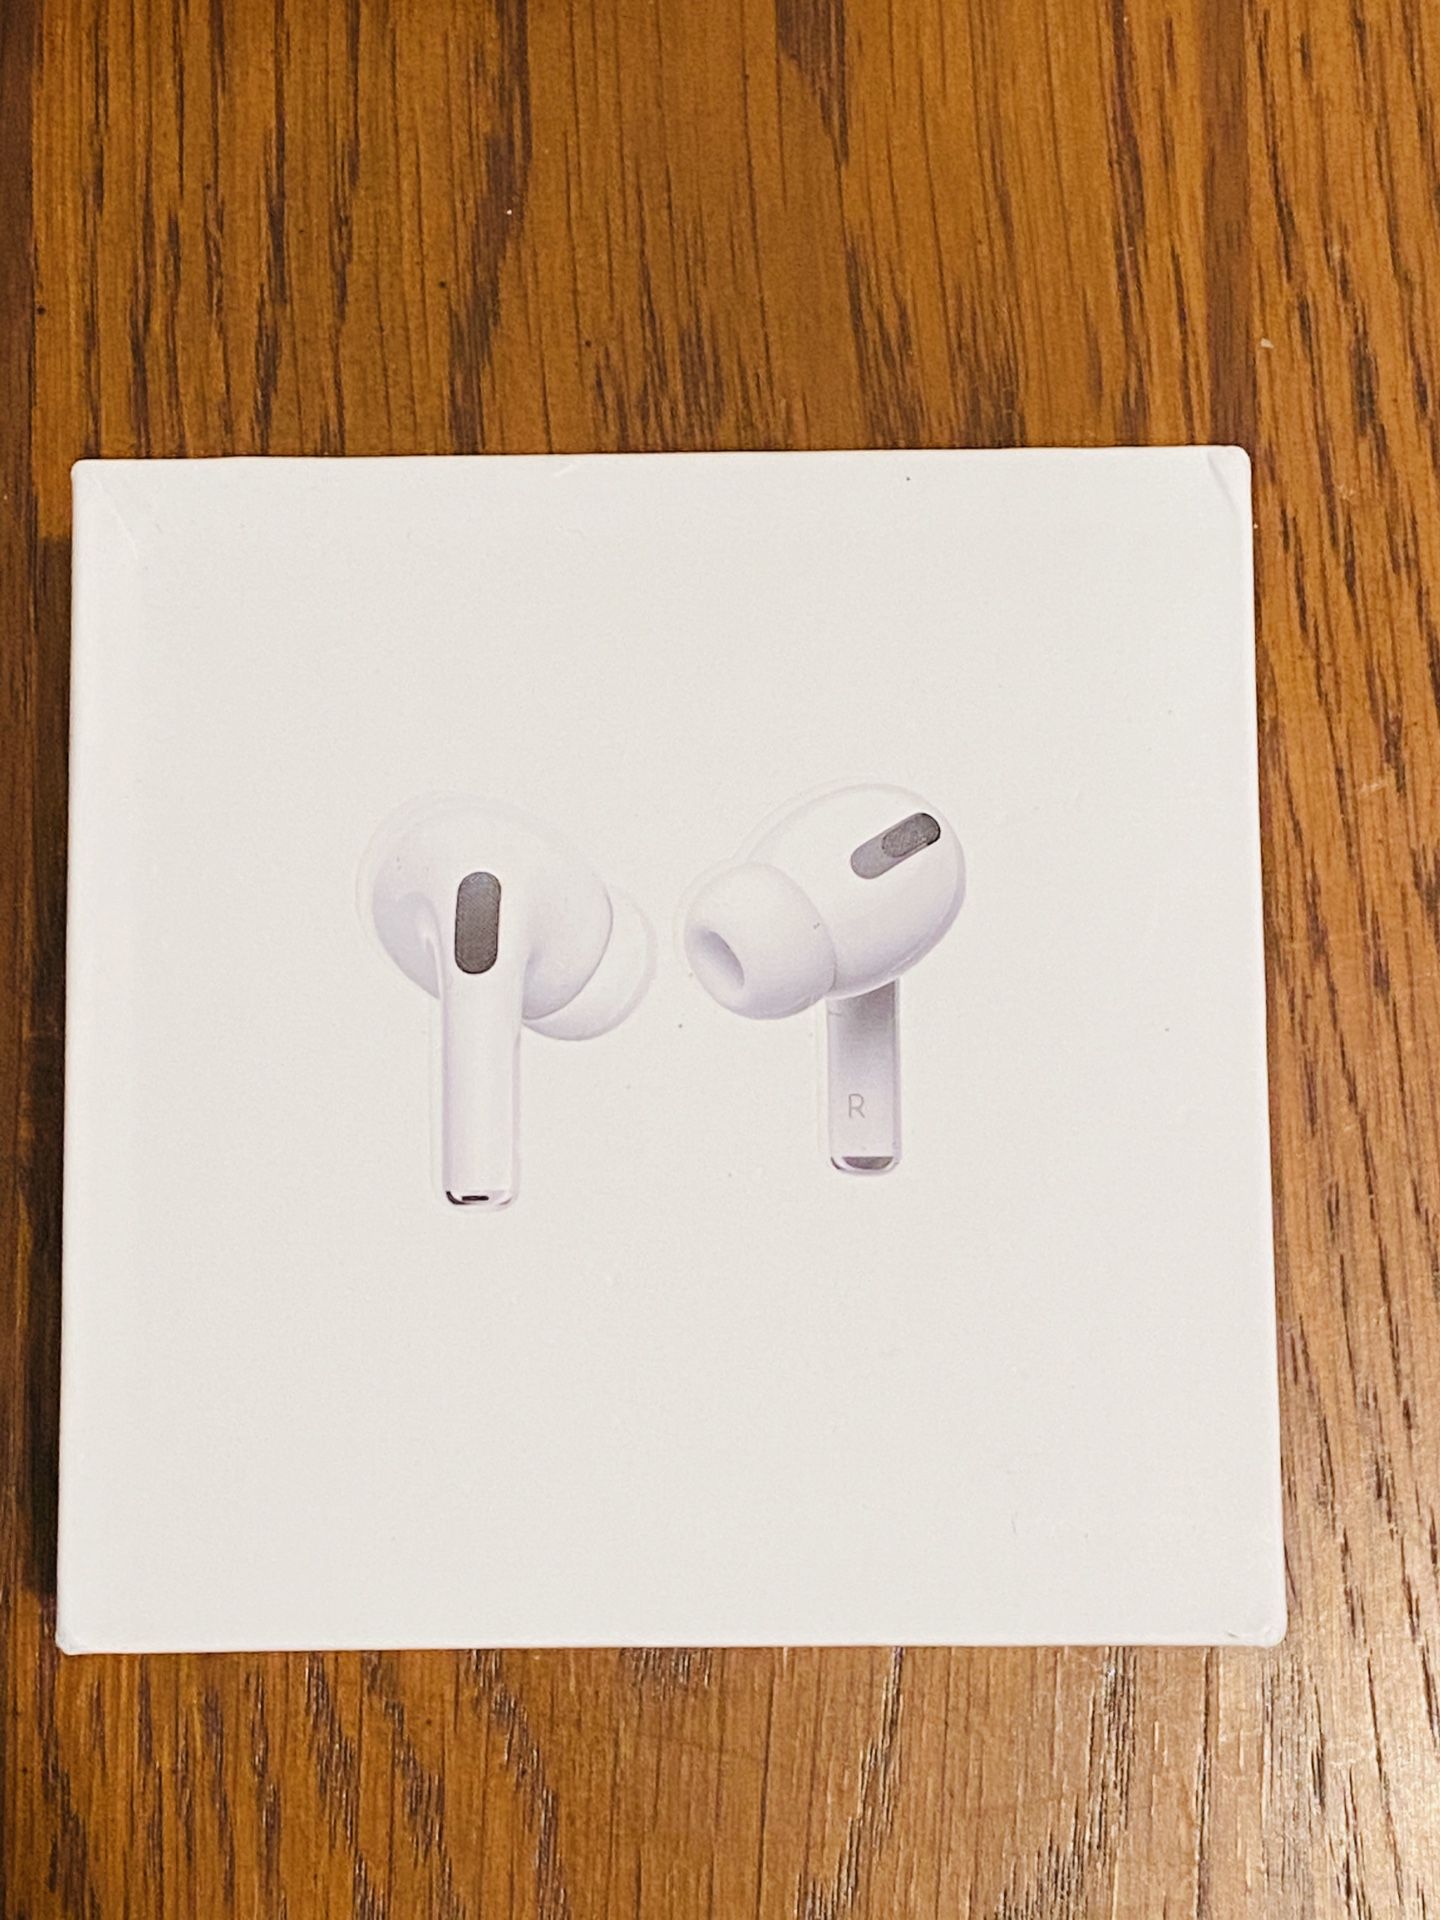 Apple Air Pod Pro Wireless Headphones - Brand New